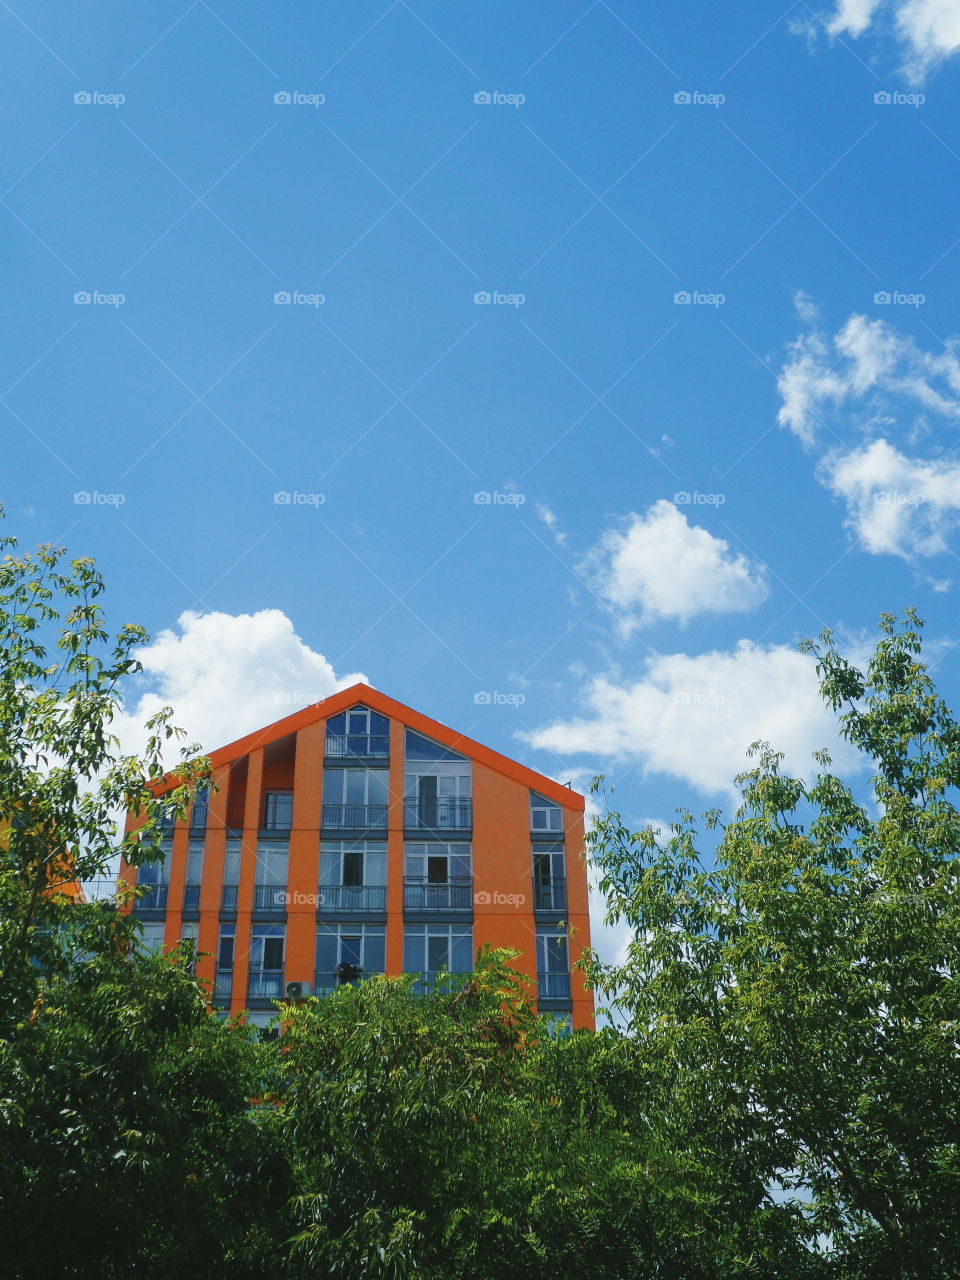 Orange facade of the building